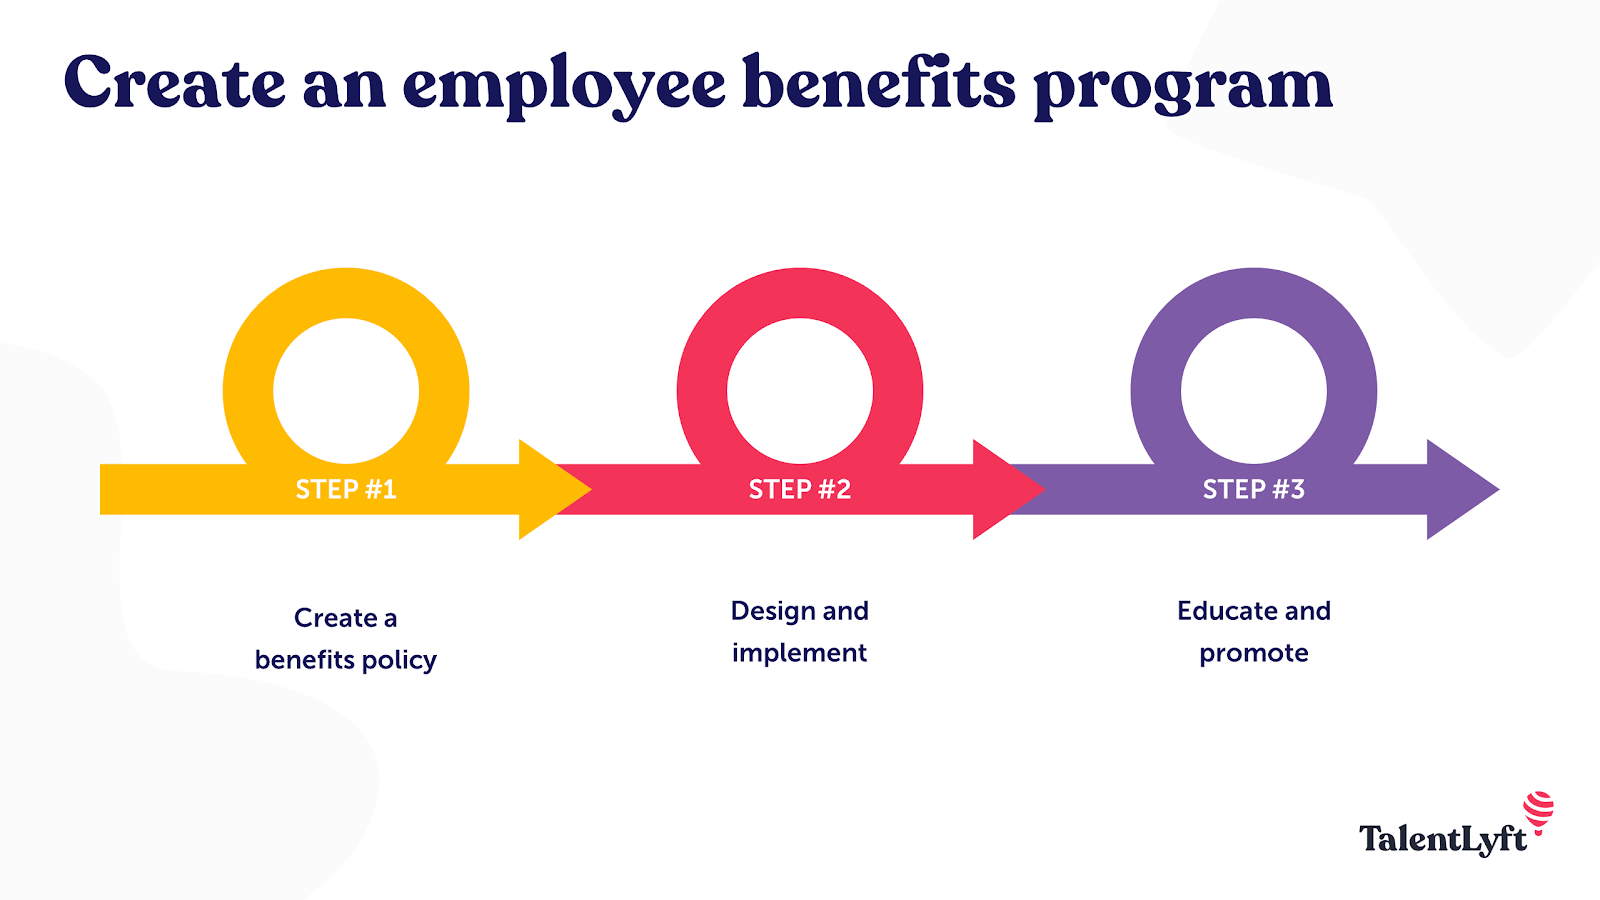 How to create an employee benefits program